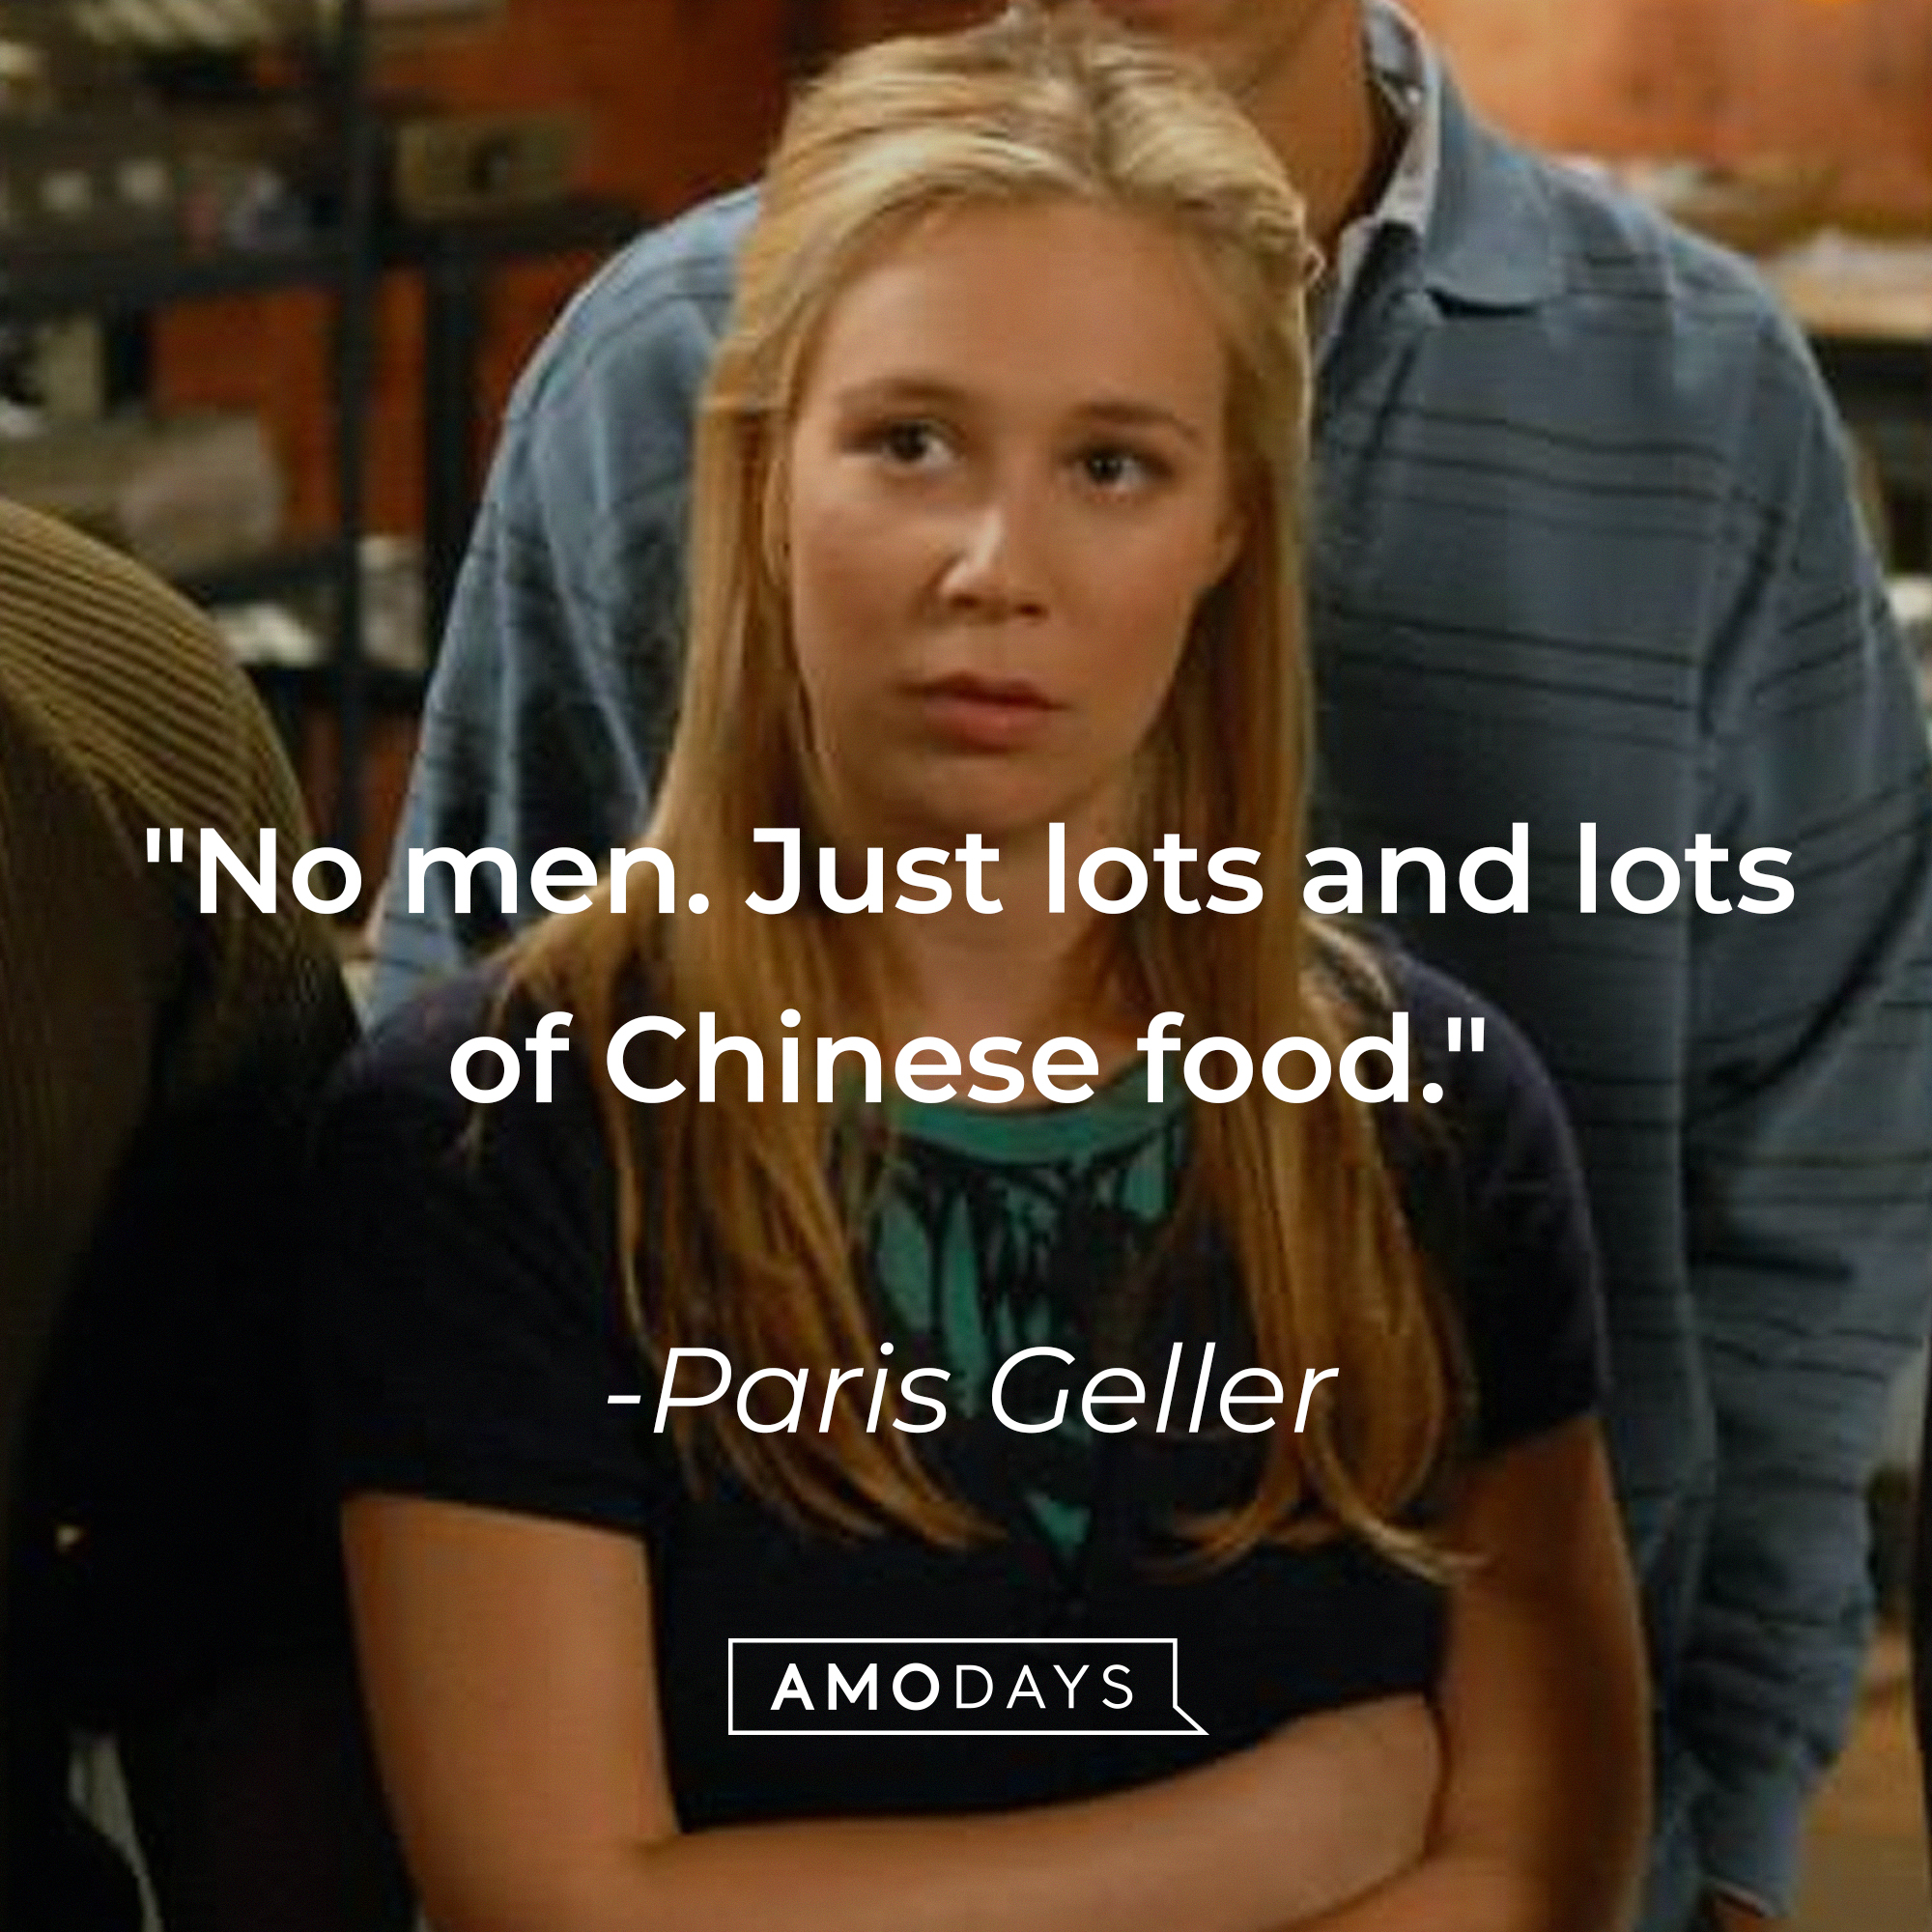 Paris Geller's quote: "No men. Just lots and lots of Chinese food." | Source: Facebook/GilmoreGirls